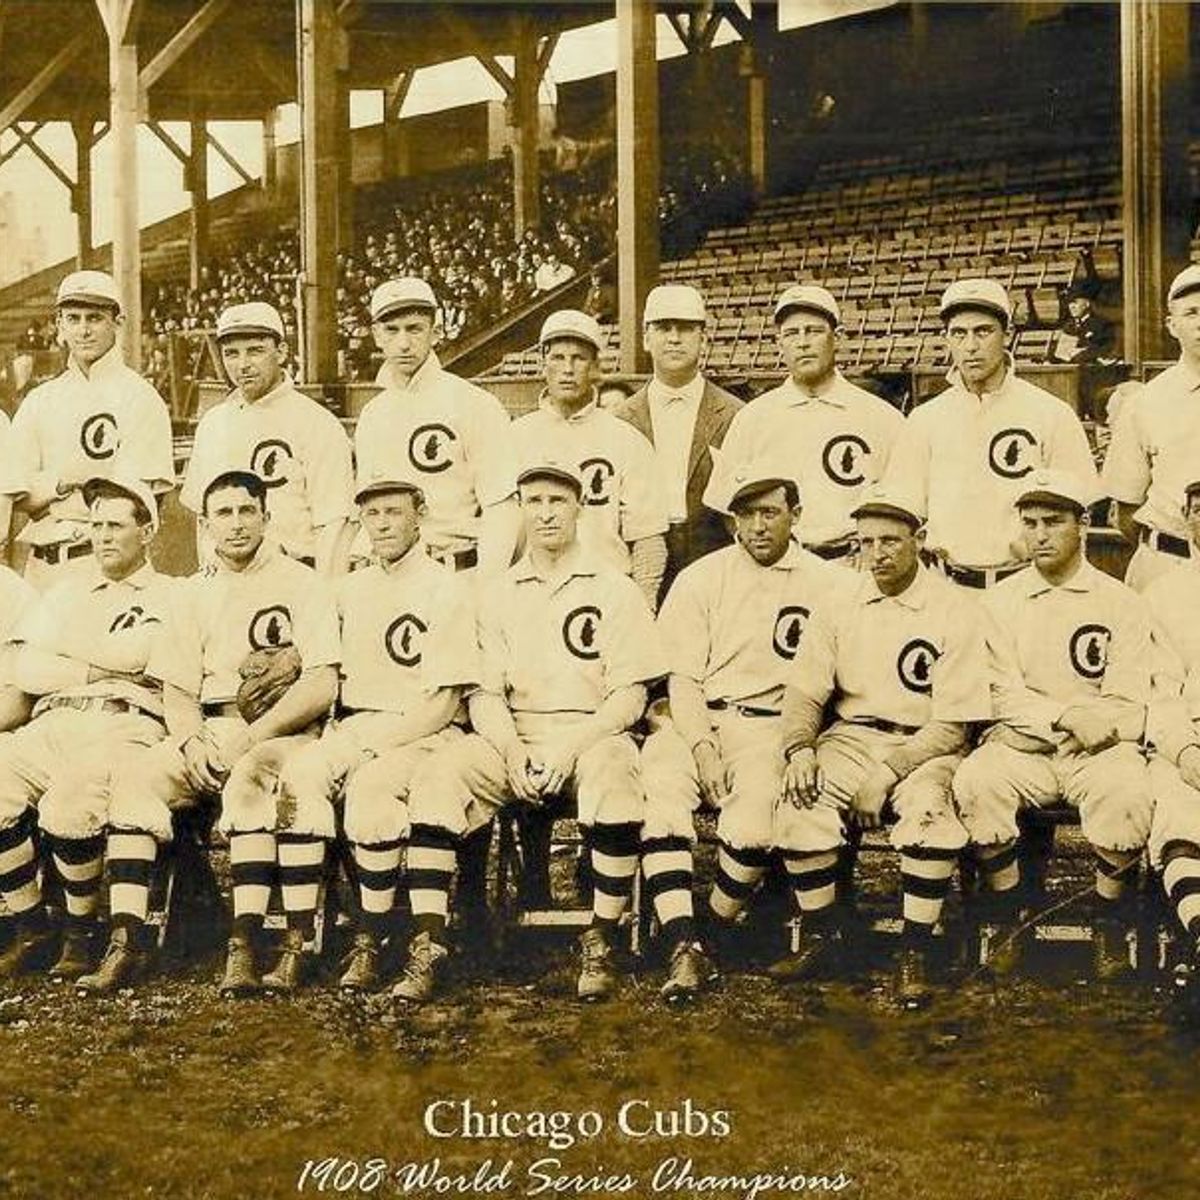 1908 cubs uniform